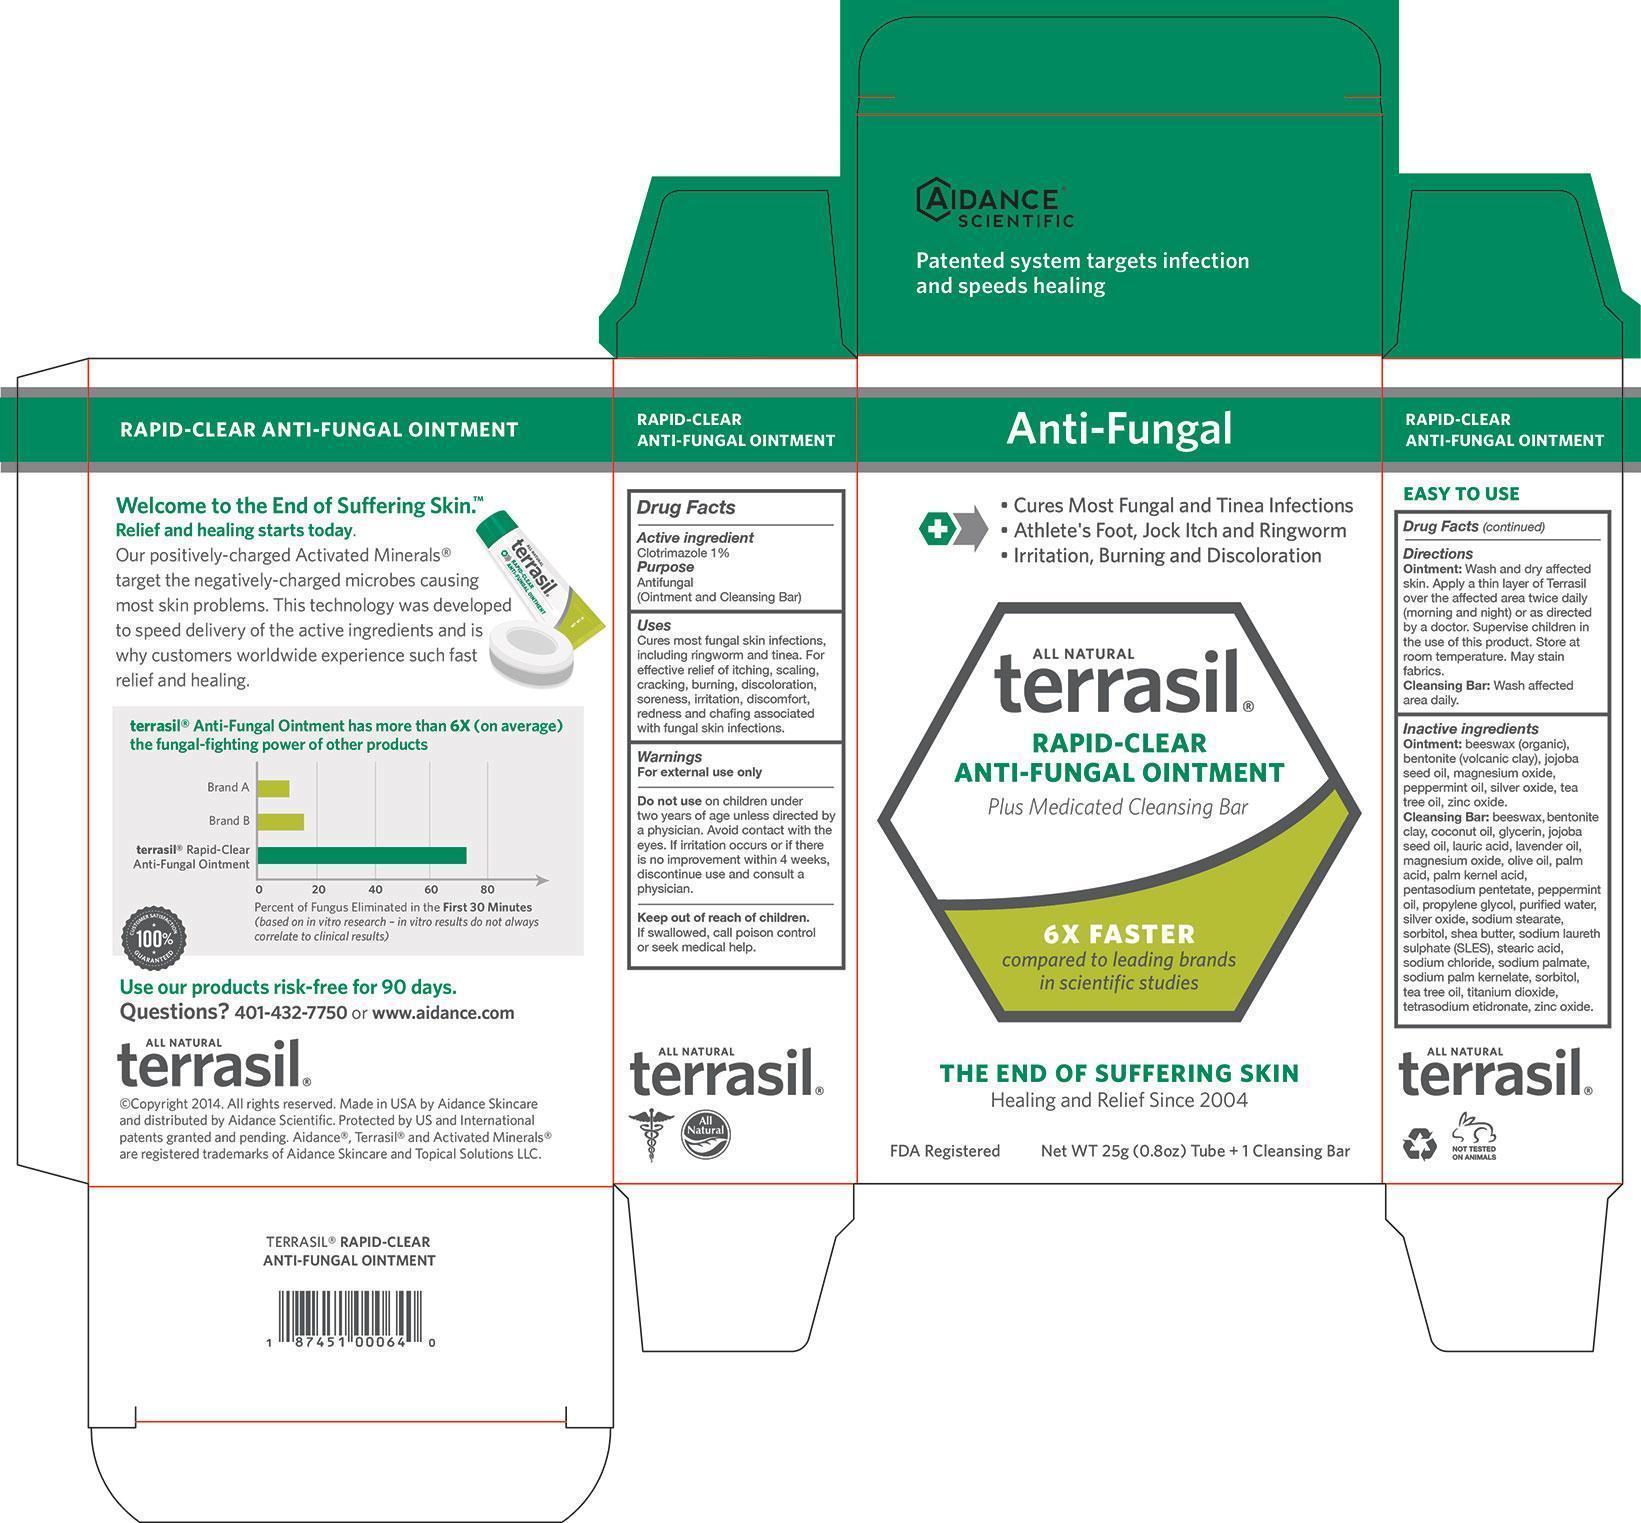 Terrasil Rapid-clear Anti-fungal (Clotrimazole) Kit [Aidance Skincare & Topical Solutions, Llc]